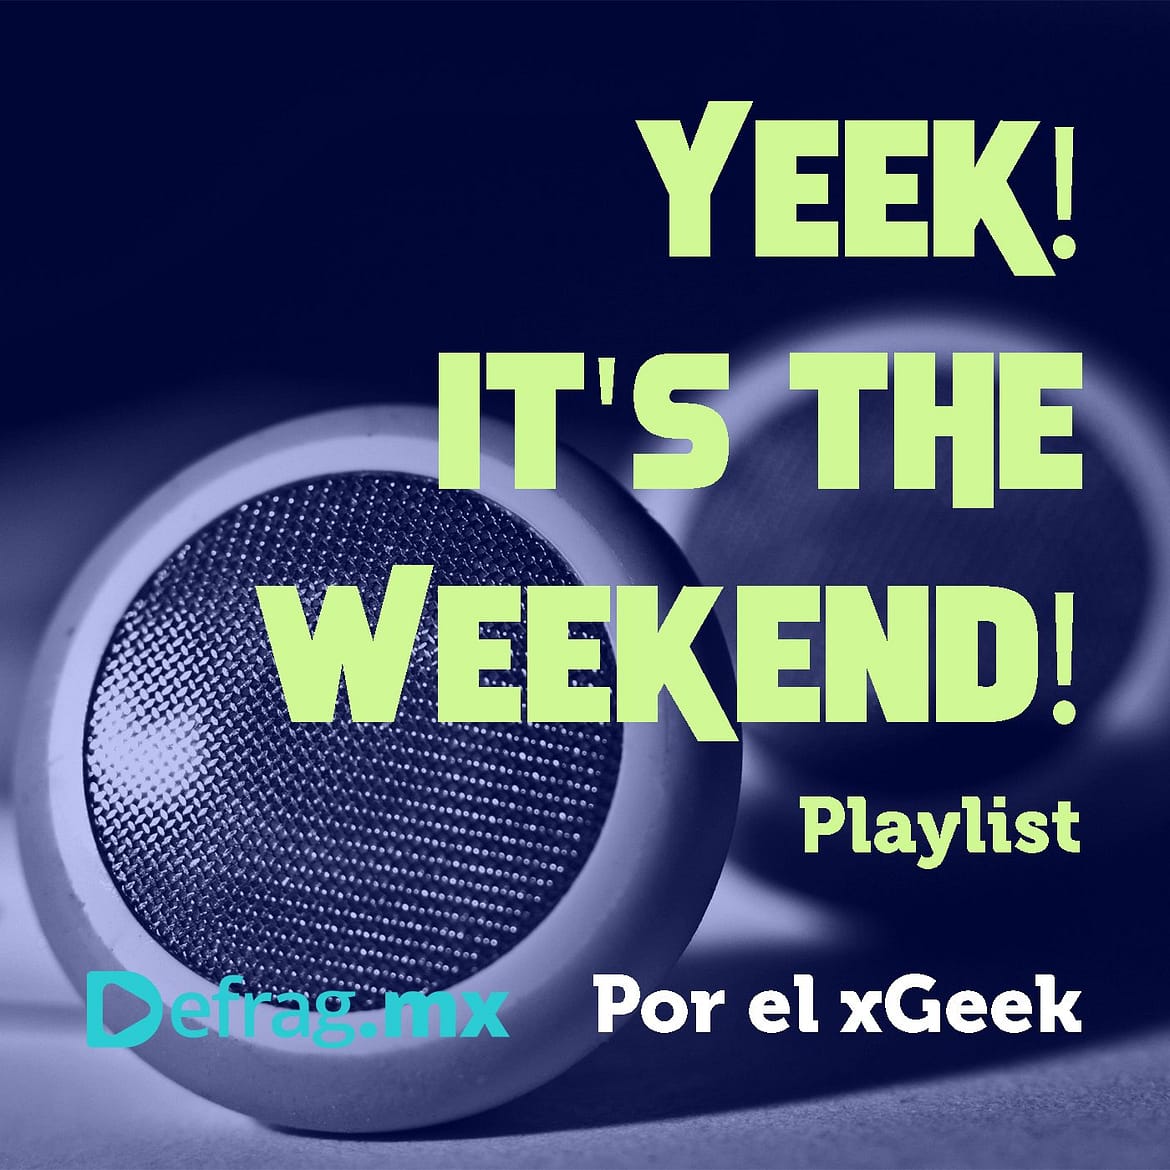 Defrag.mx Yeek! It's The Weekend! Playlist Abr 15 2022